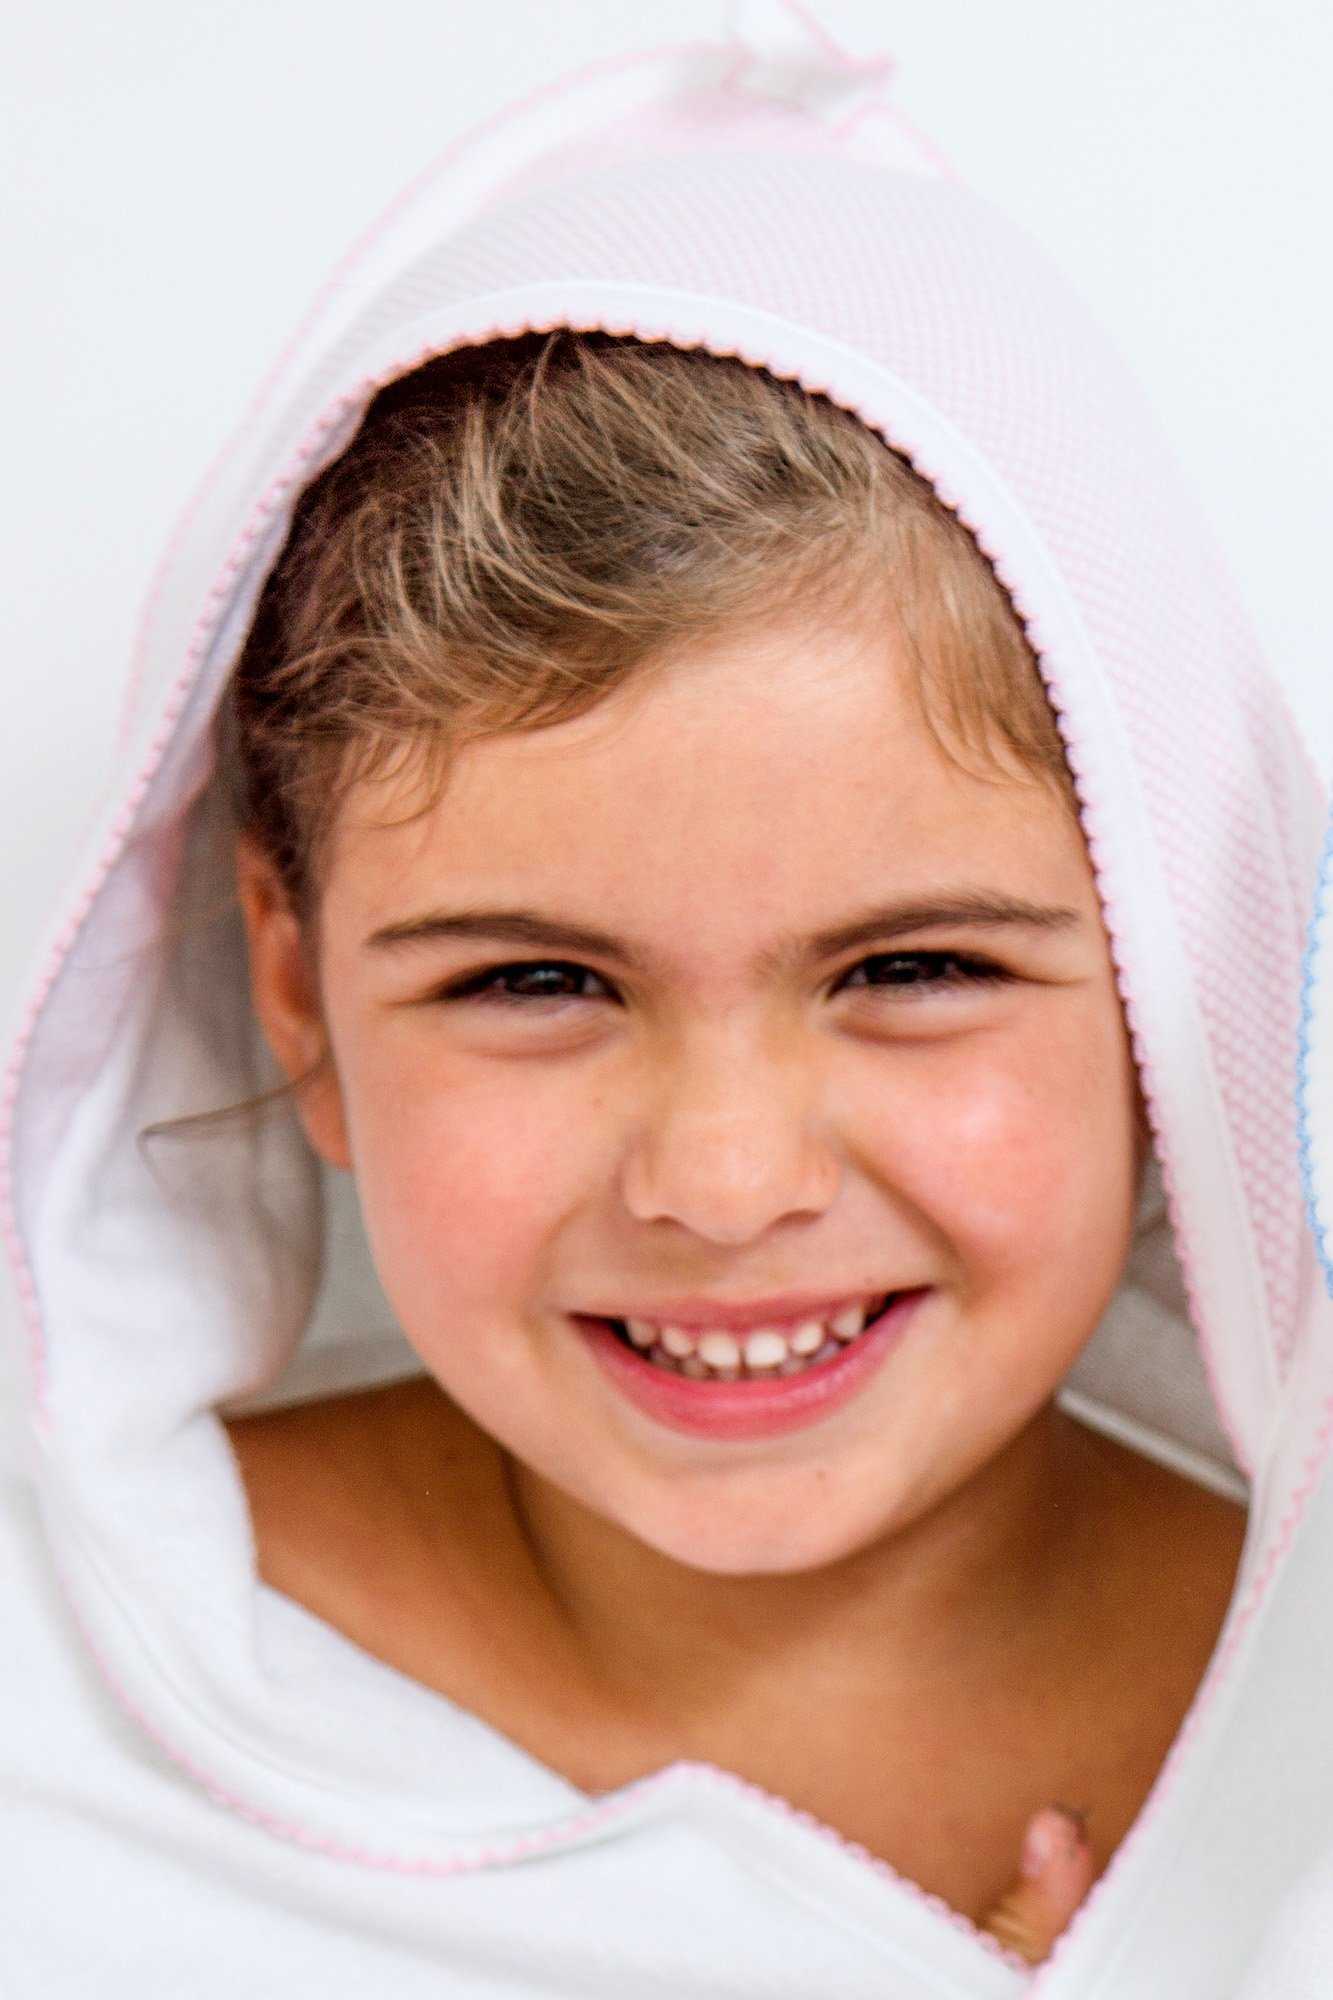 Baby Girl Pink Bubble Hooded Towel